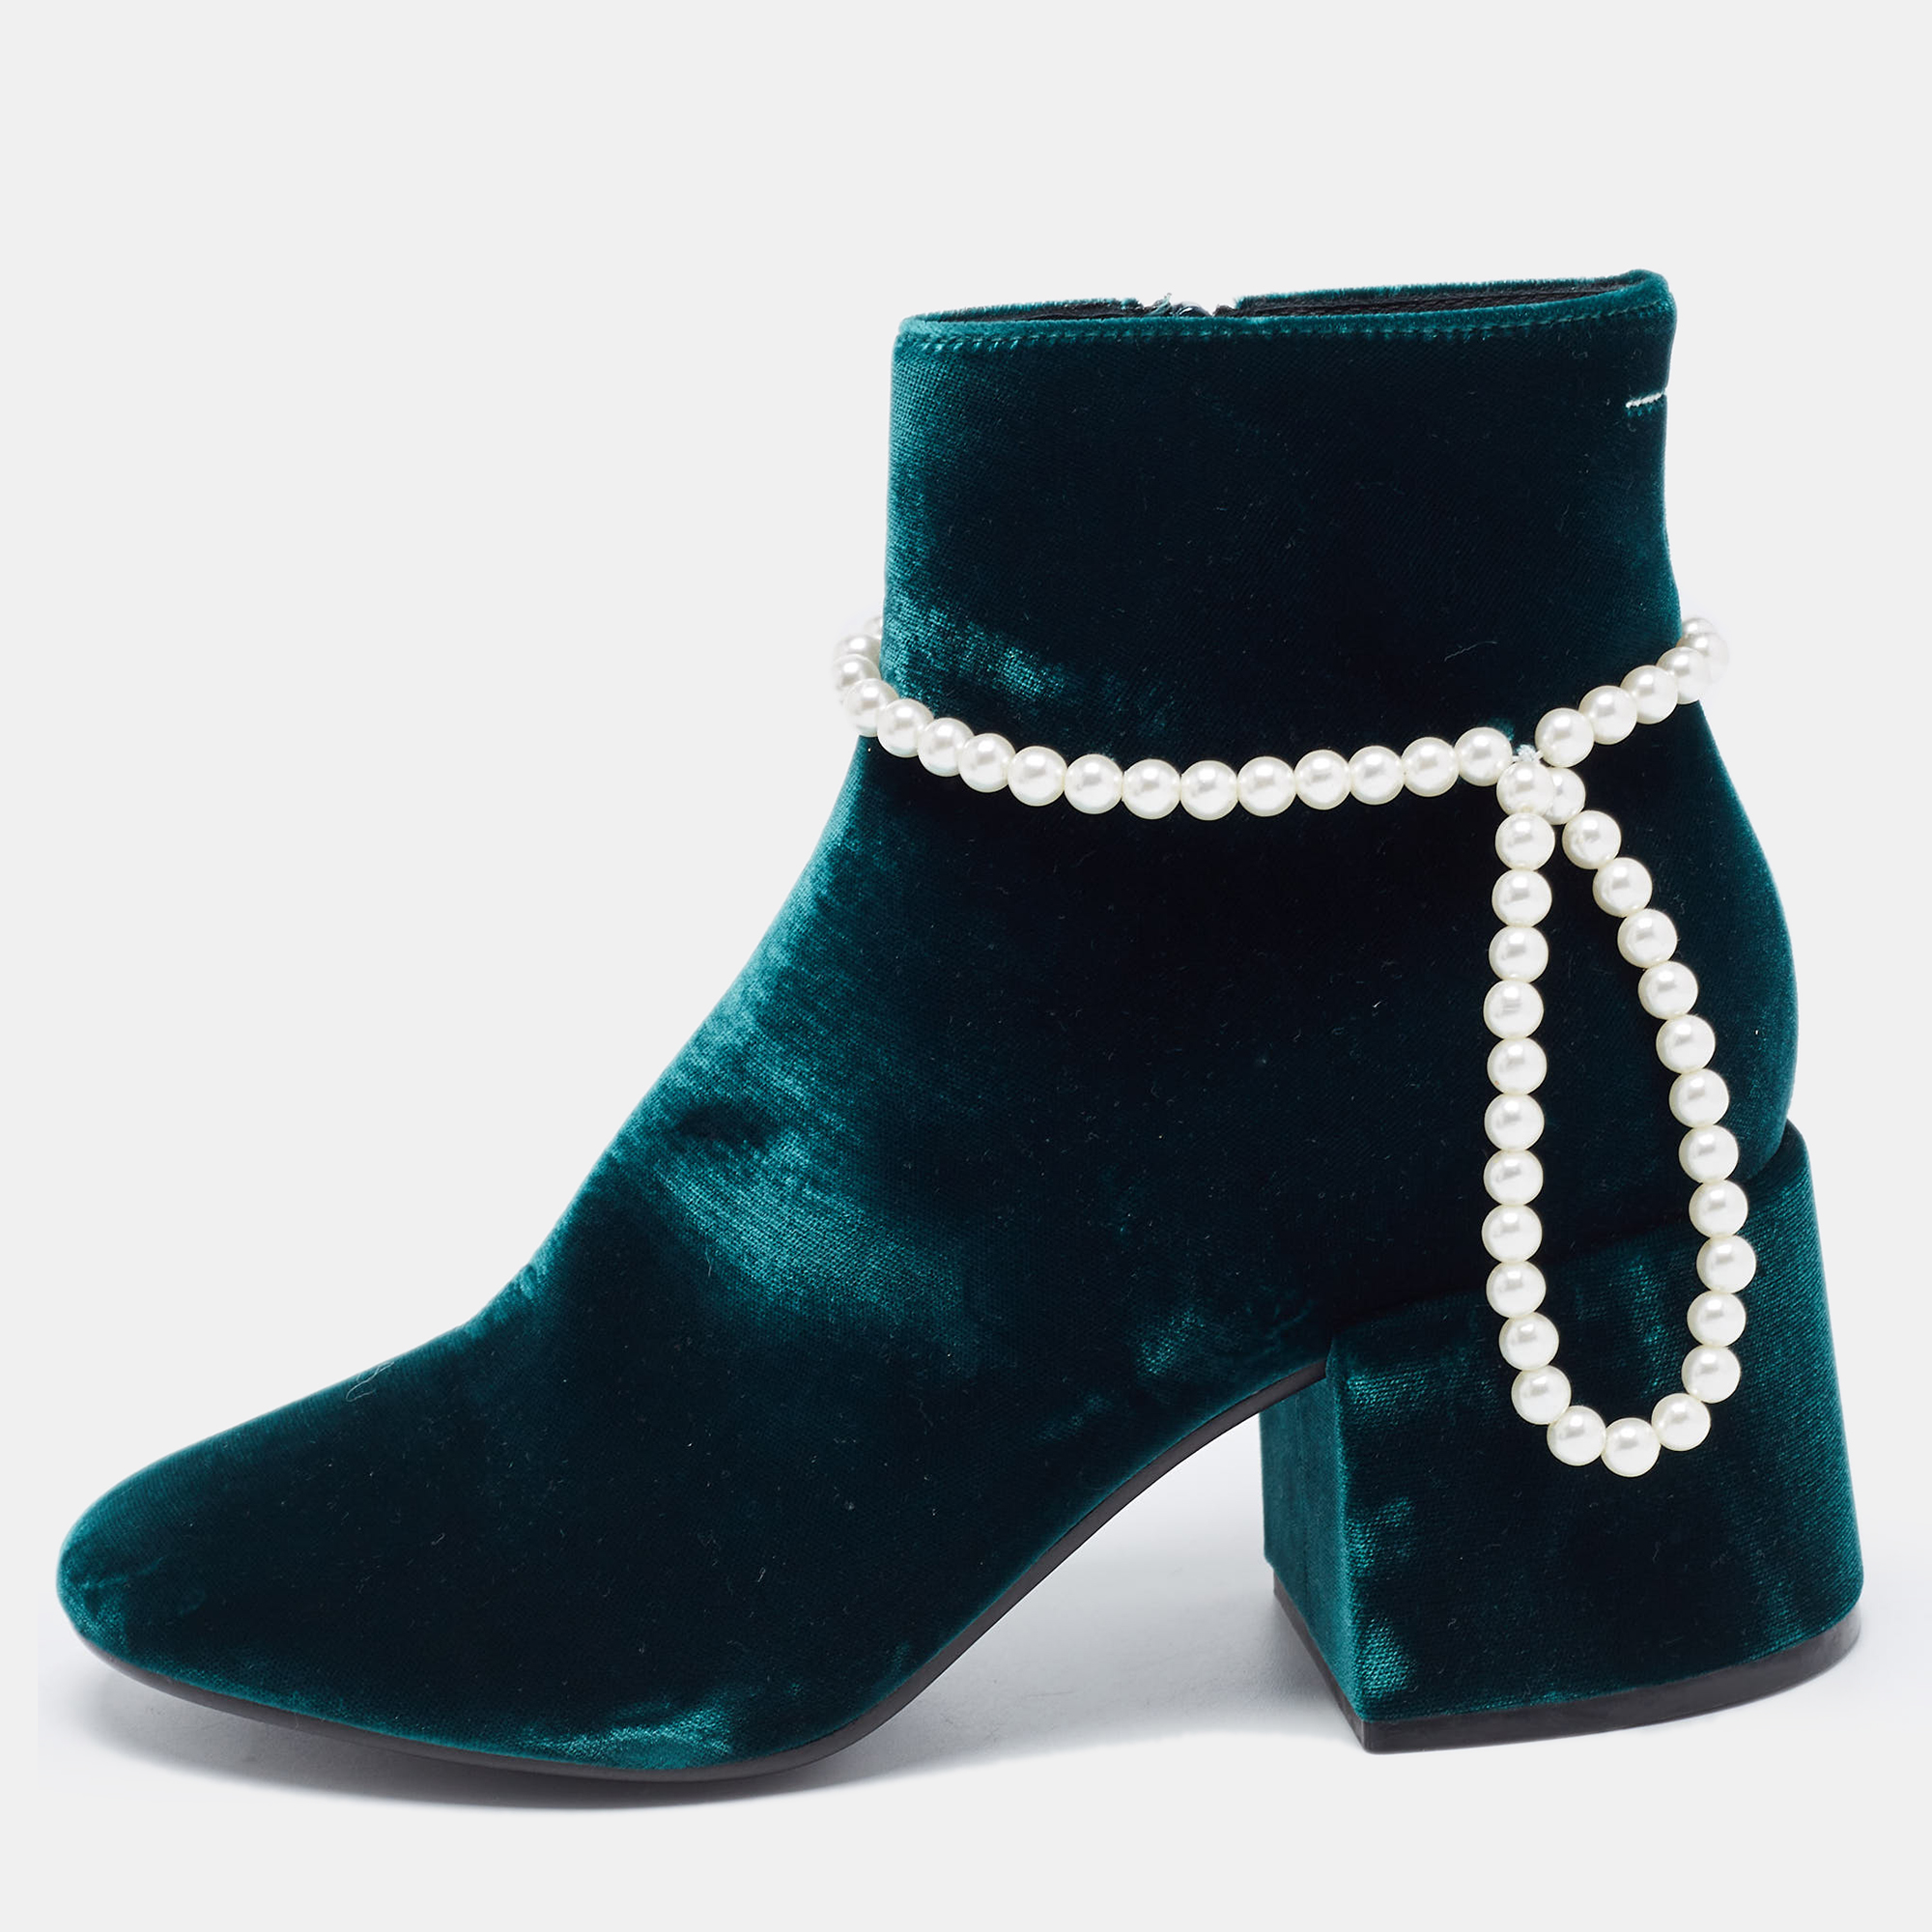 Maison Martin Margiela Green Velvet Embellished Ankle Boots Size 39